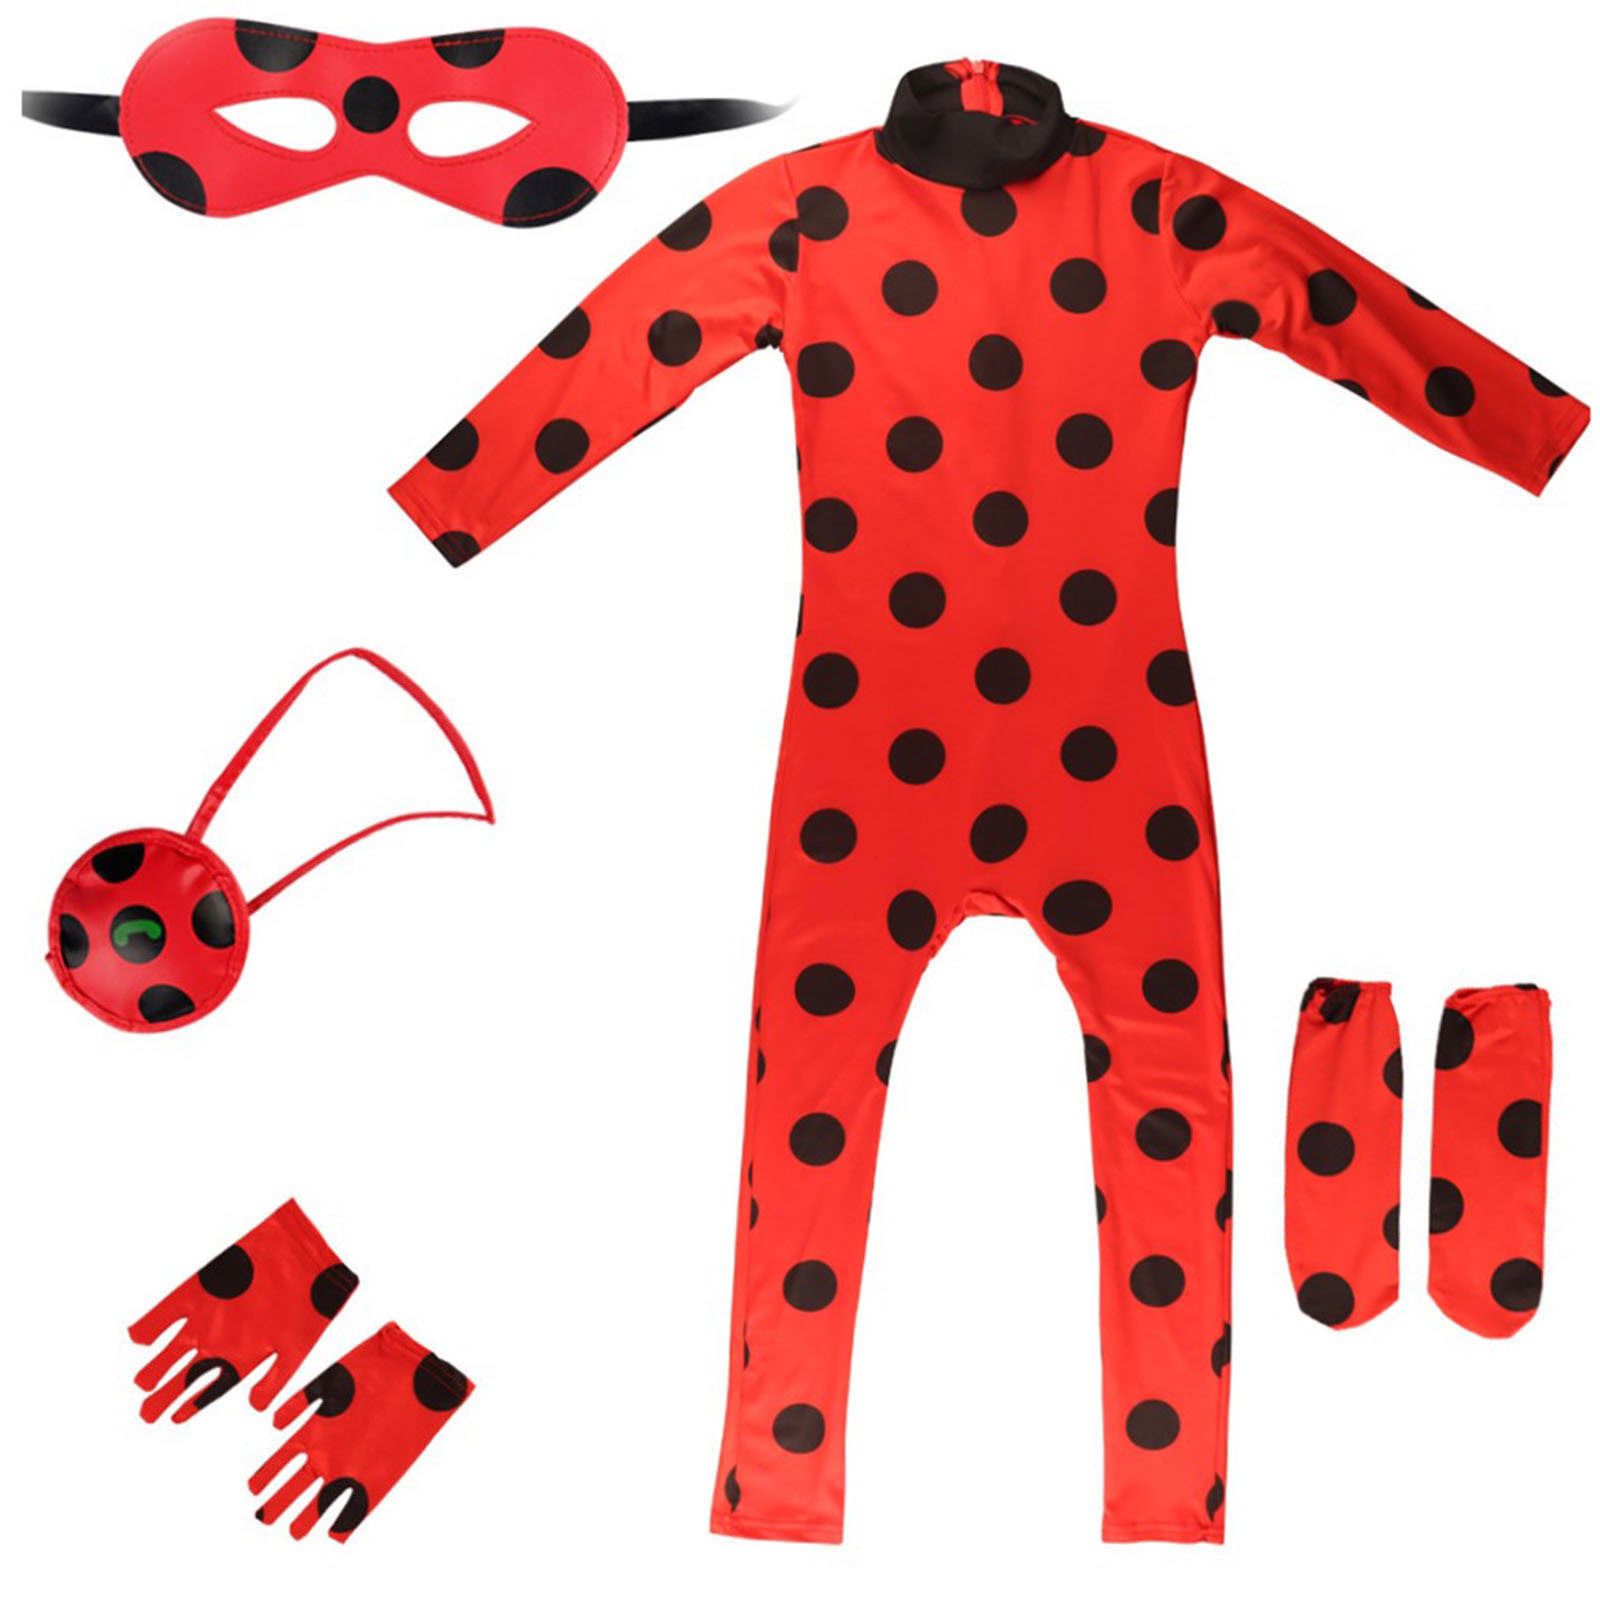 Kids Ladybug Costume Dress Up Cosplay Black Spot Red Jumpsuit 5Pcs Set